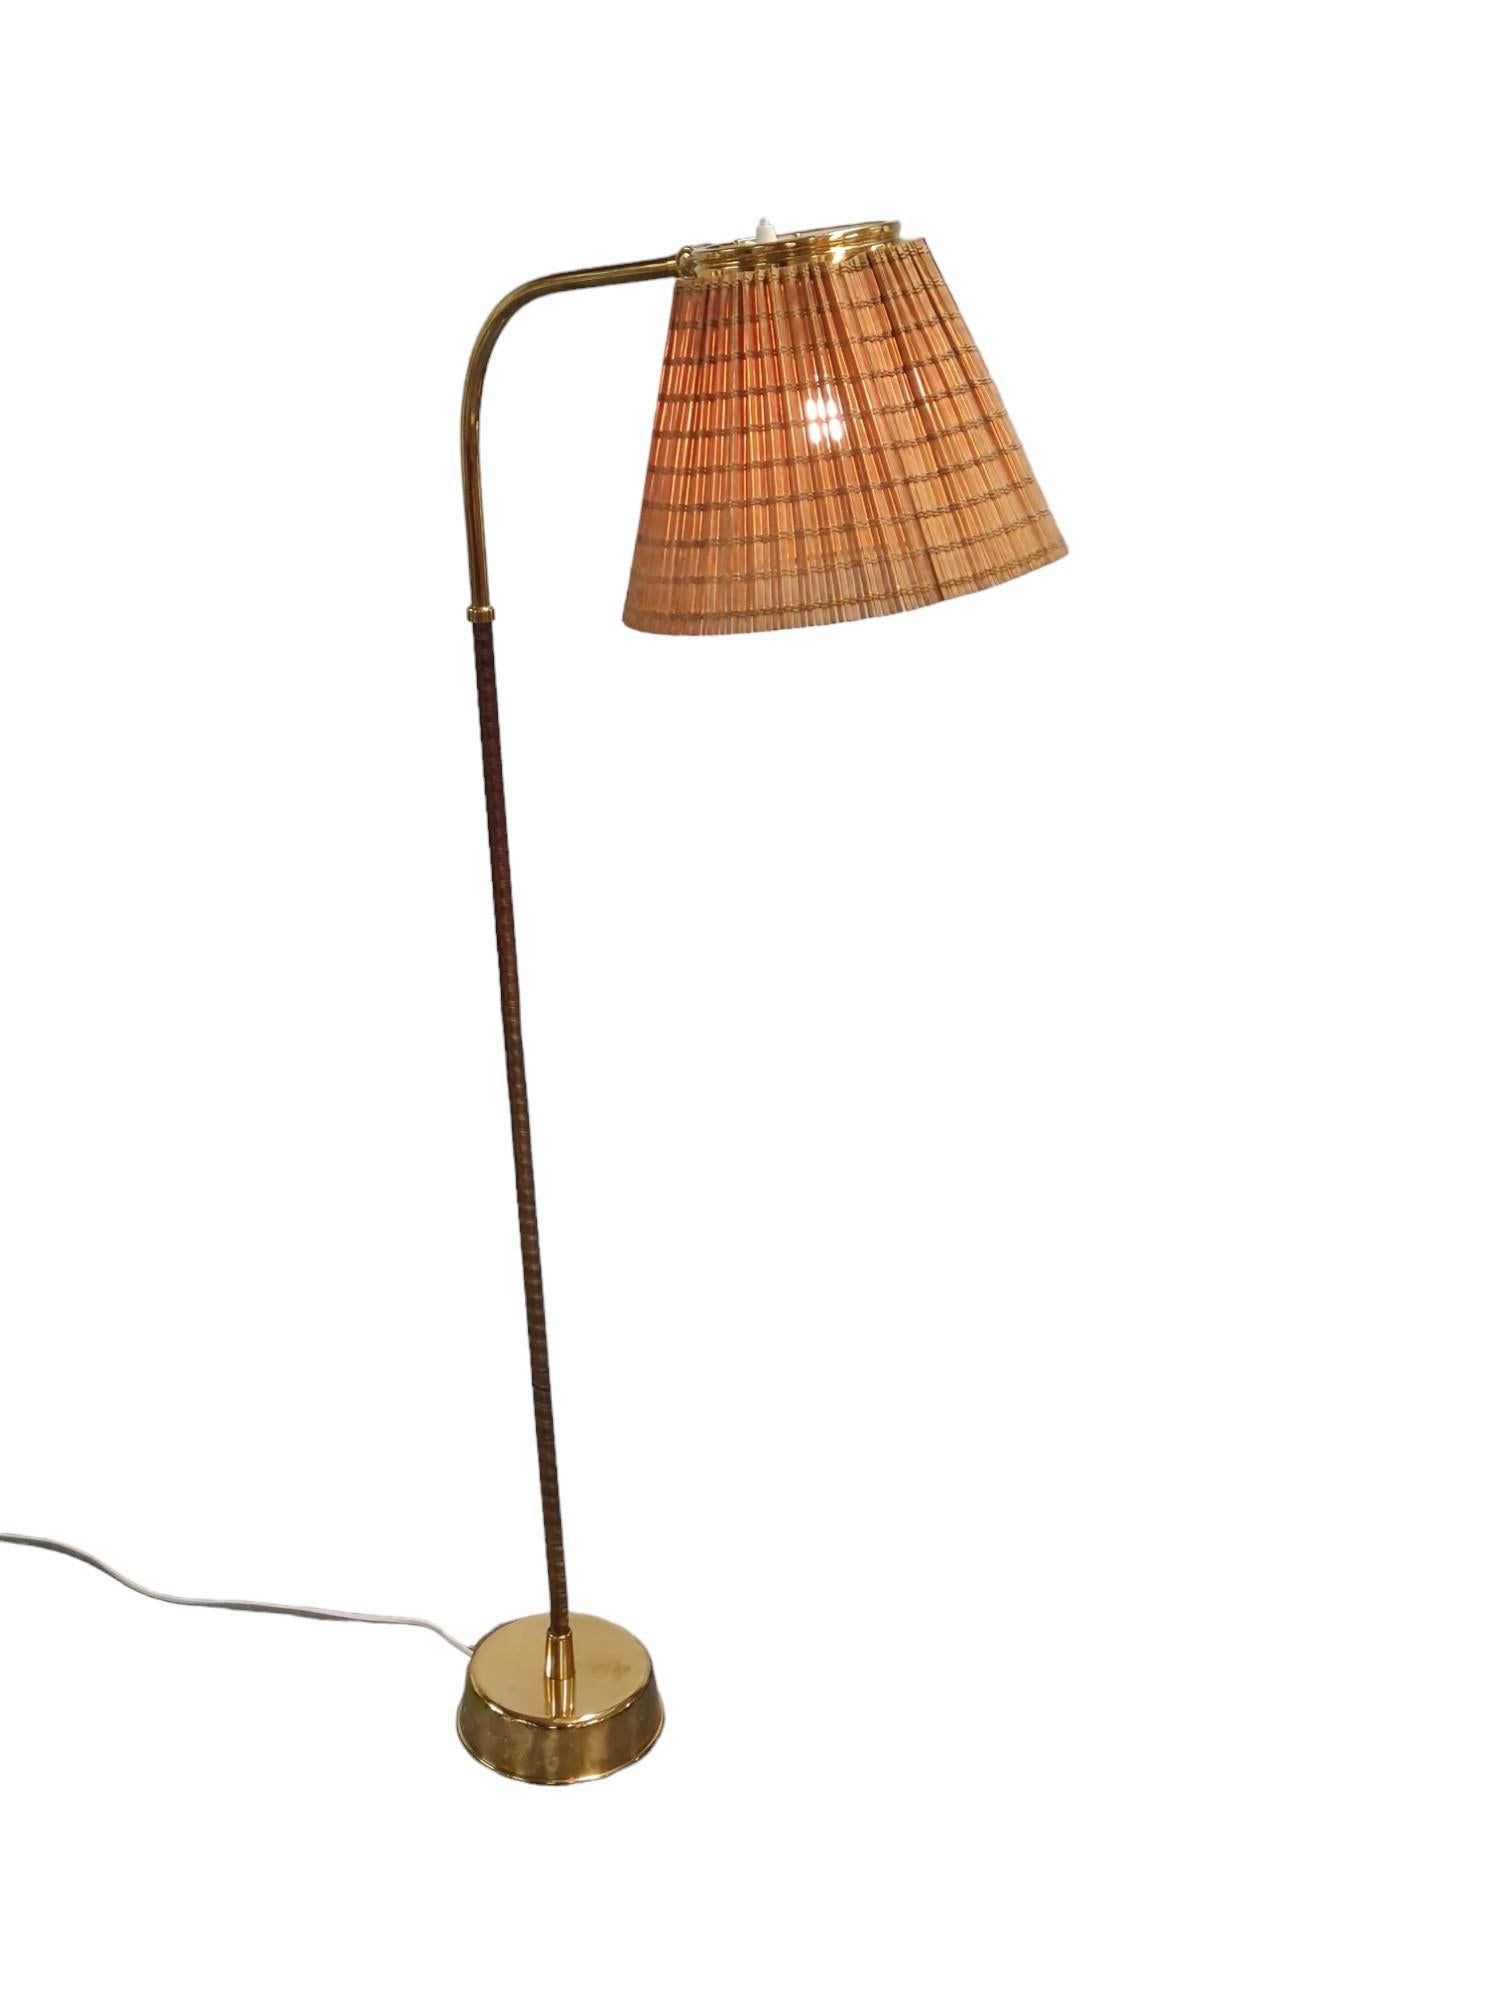 Mid-20th Century Lisa Johansson-Pape, Floor Lamp Model 2063 in Rattan, Orno For Sale